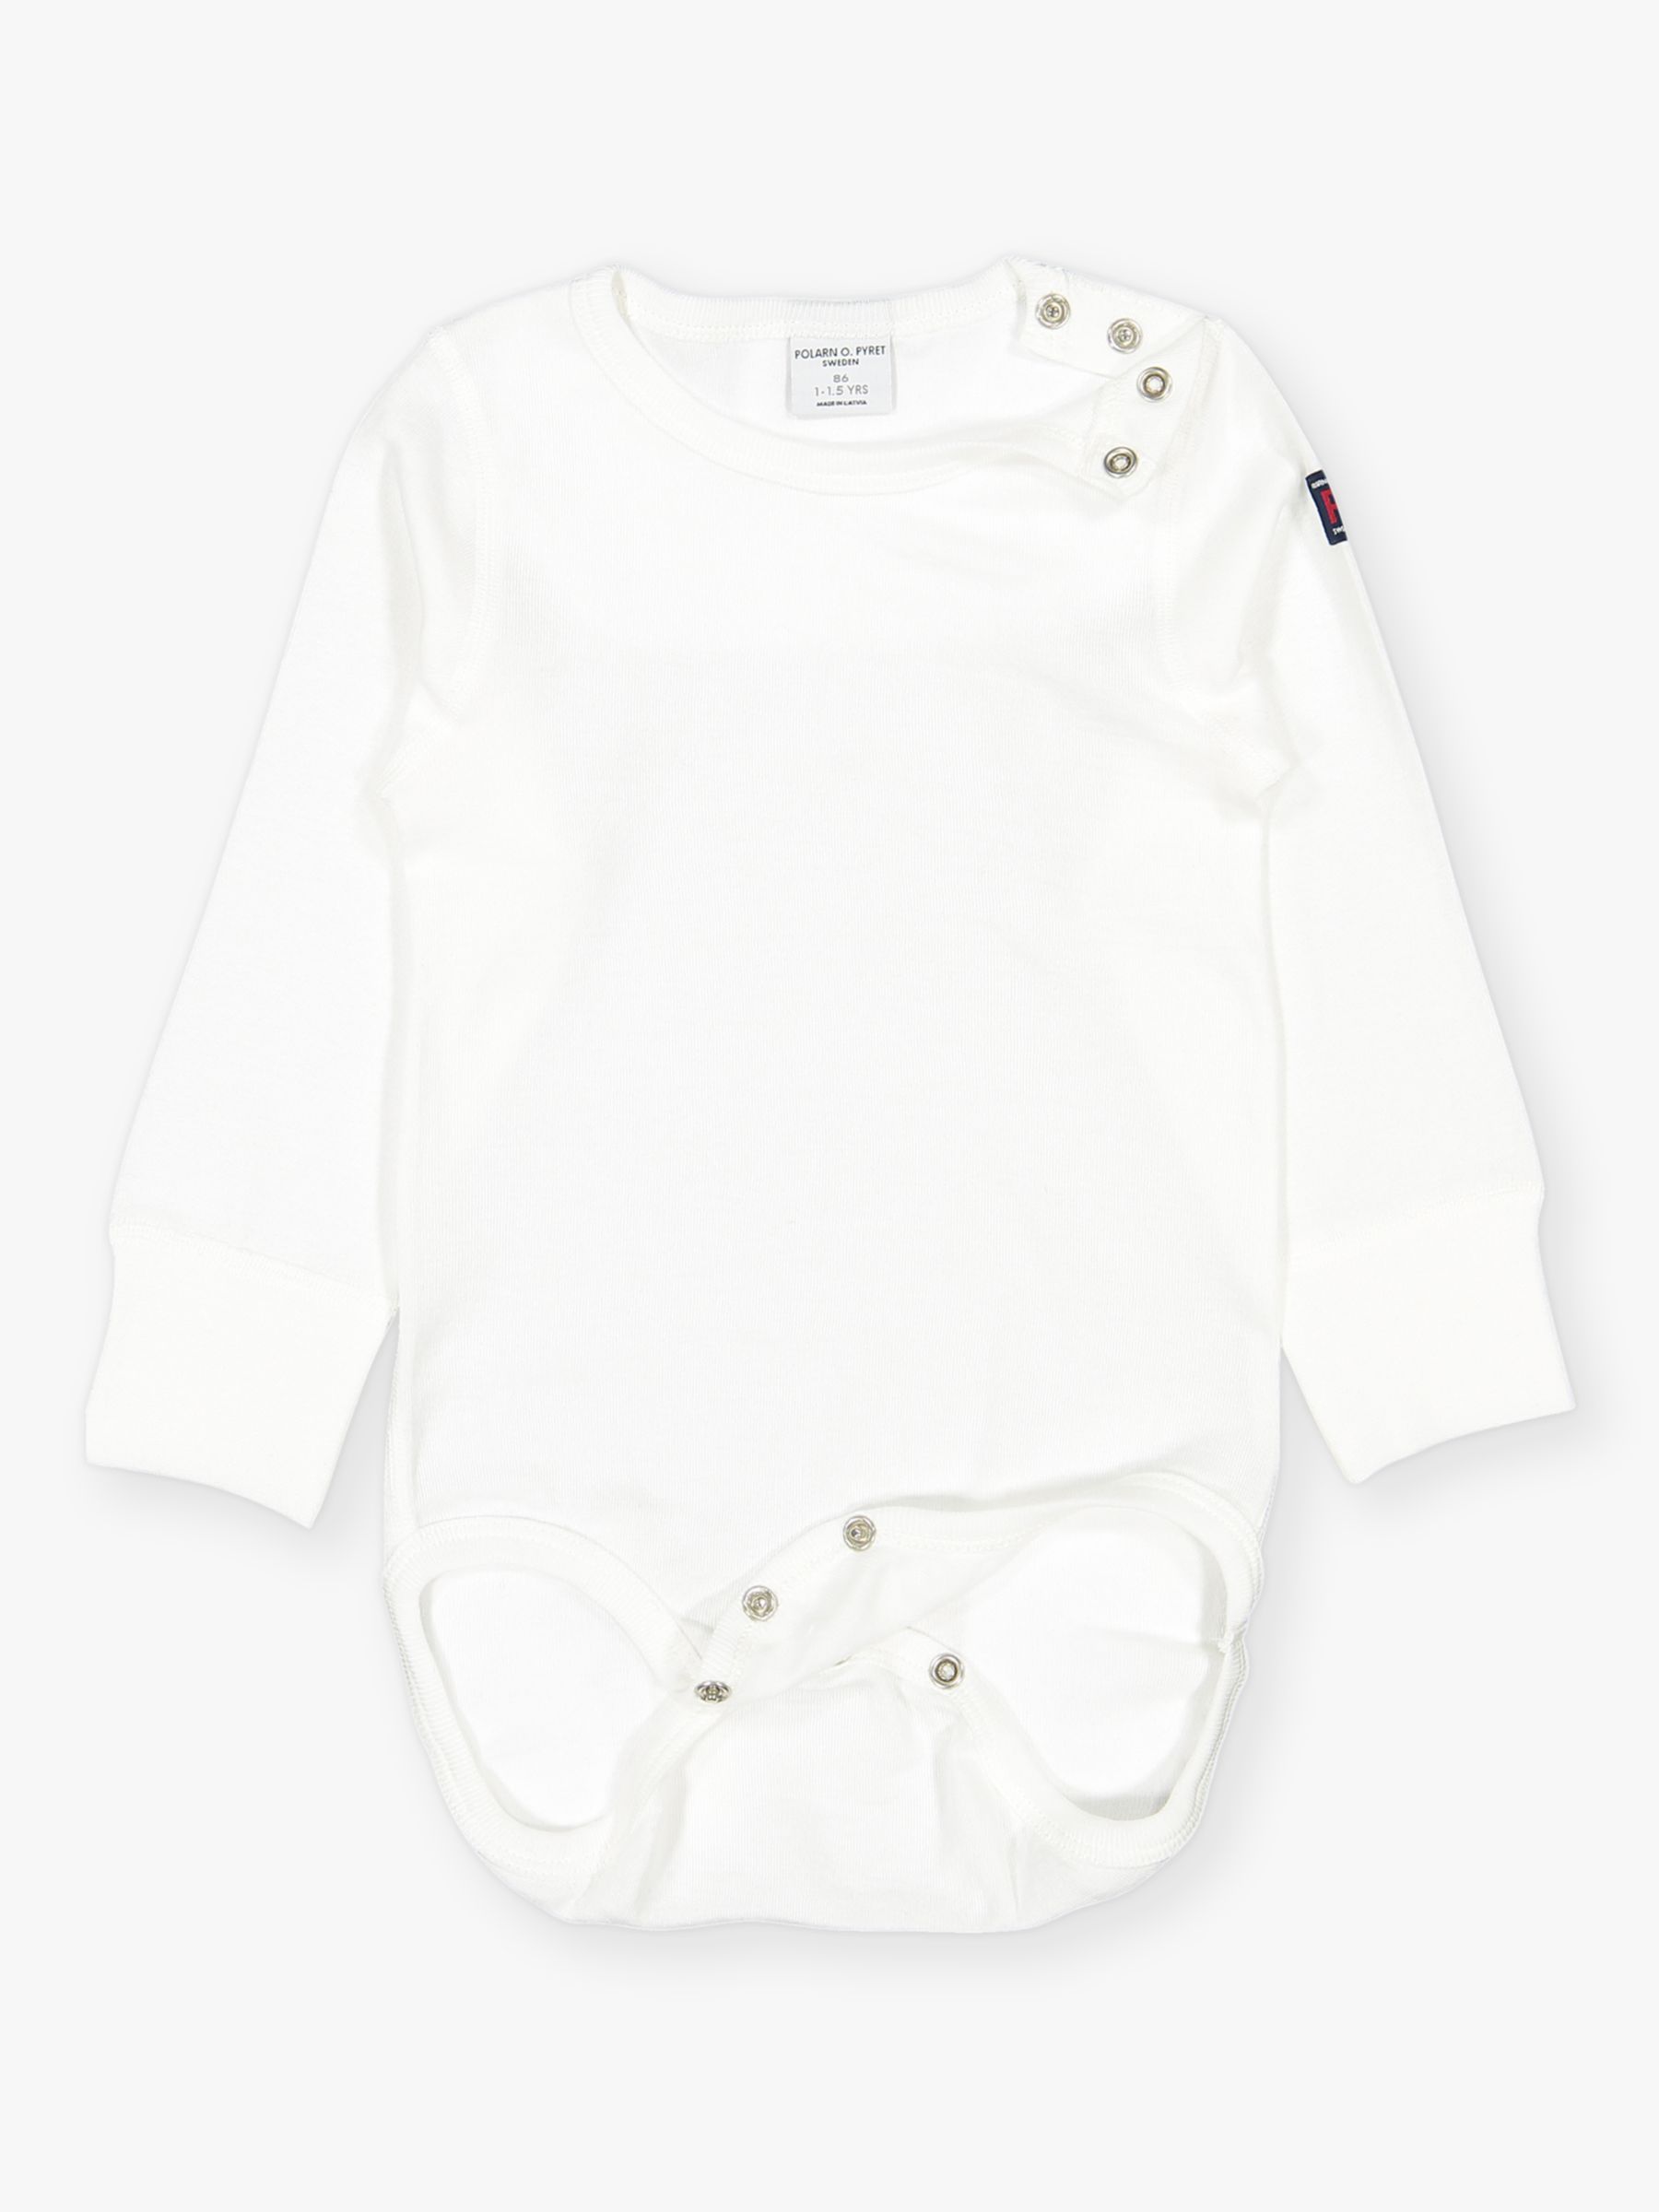 Buy Polarn O. Pyret Baby GOTS Organic Cotton Long Sleeve Bodysuit, White Online at johnlewis.com